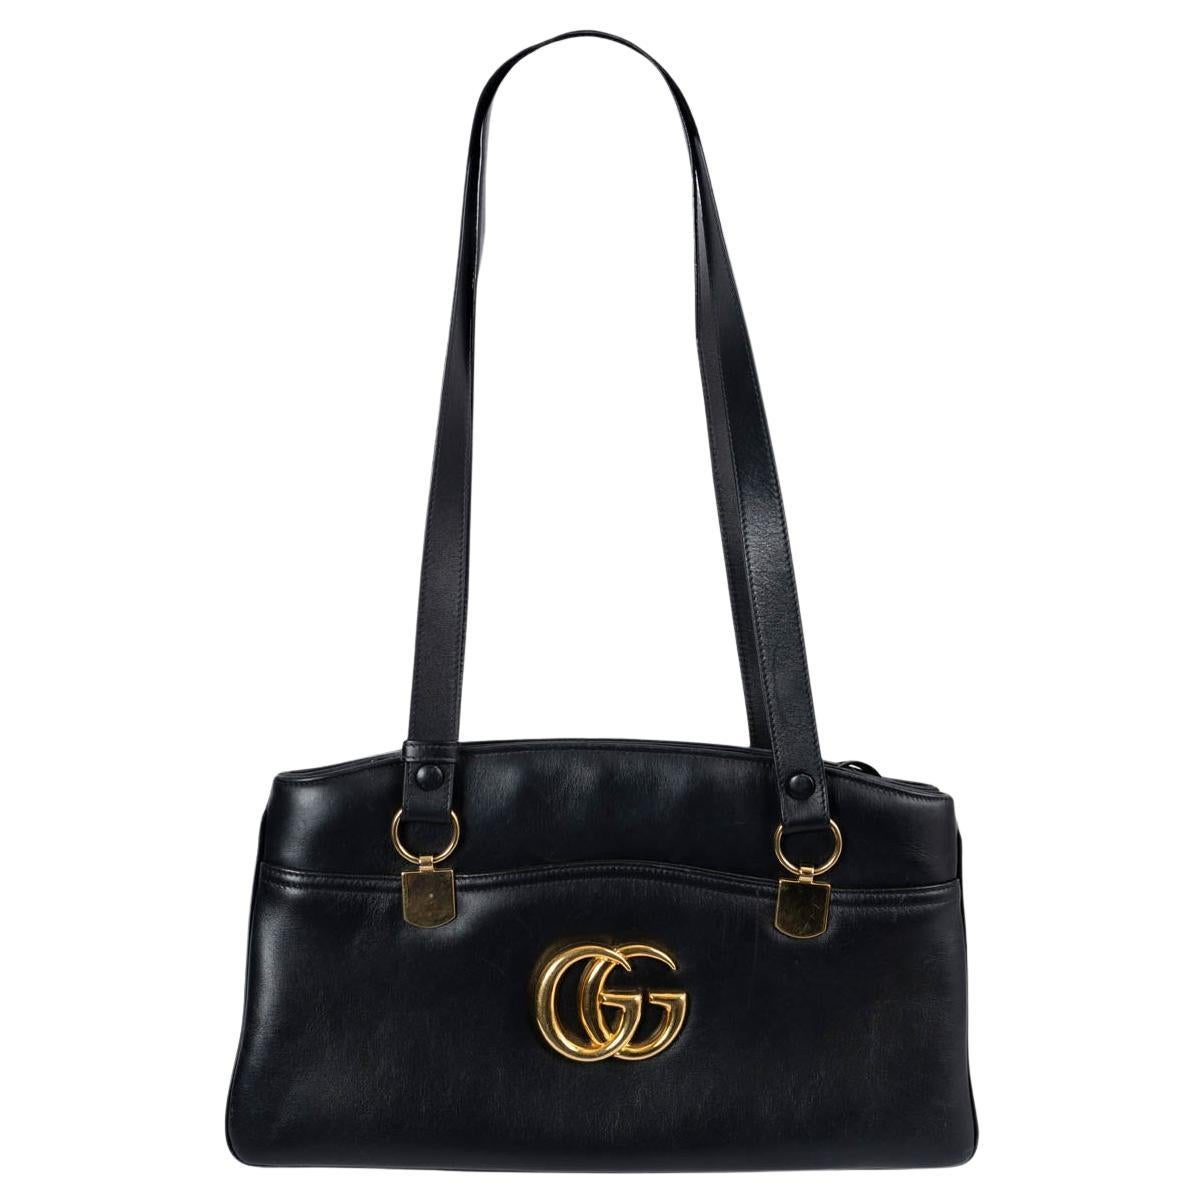 GUCCI cuir noir 2019 ARLI LARGE TOP HANDLE Bag en vente